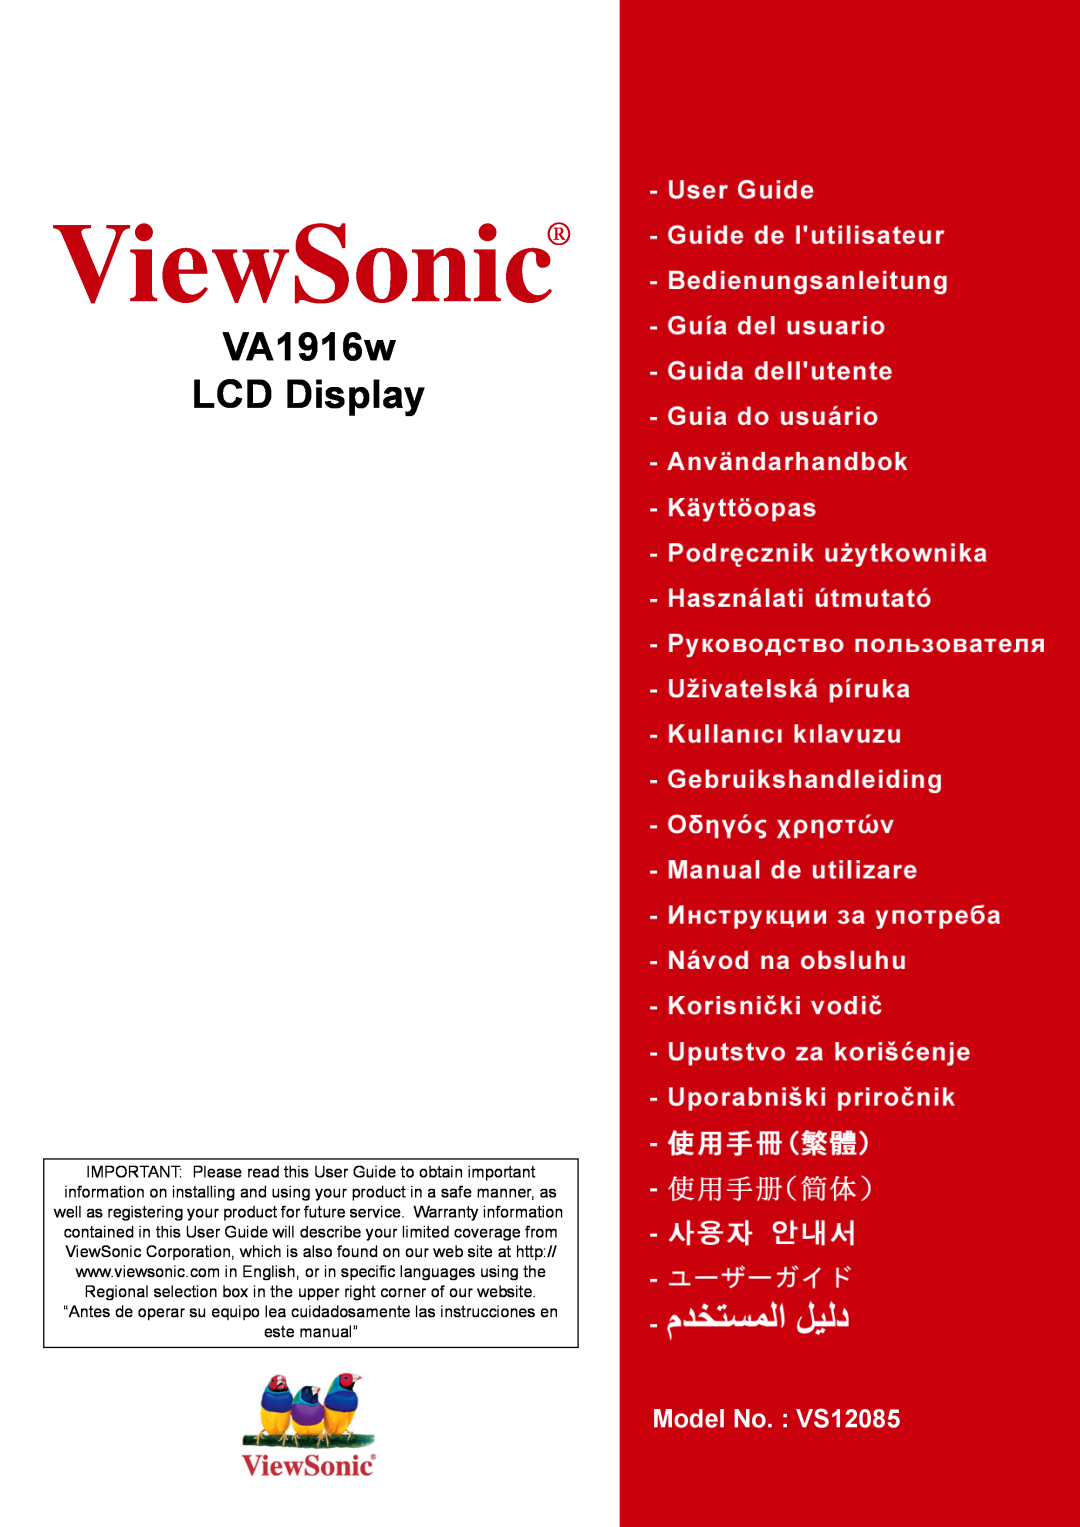 ViewSonic VA1916W warranty ViewSonic, VA1916w LCD Display, Model No. VS12085 